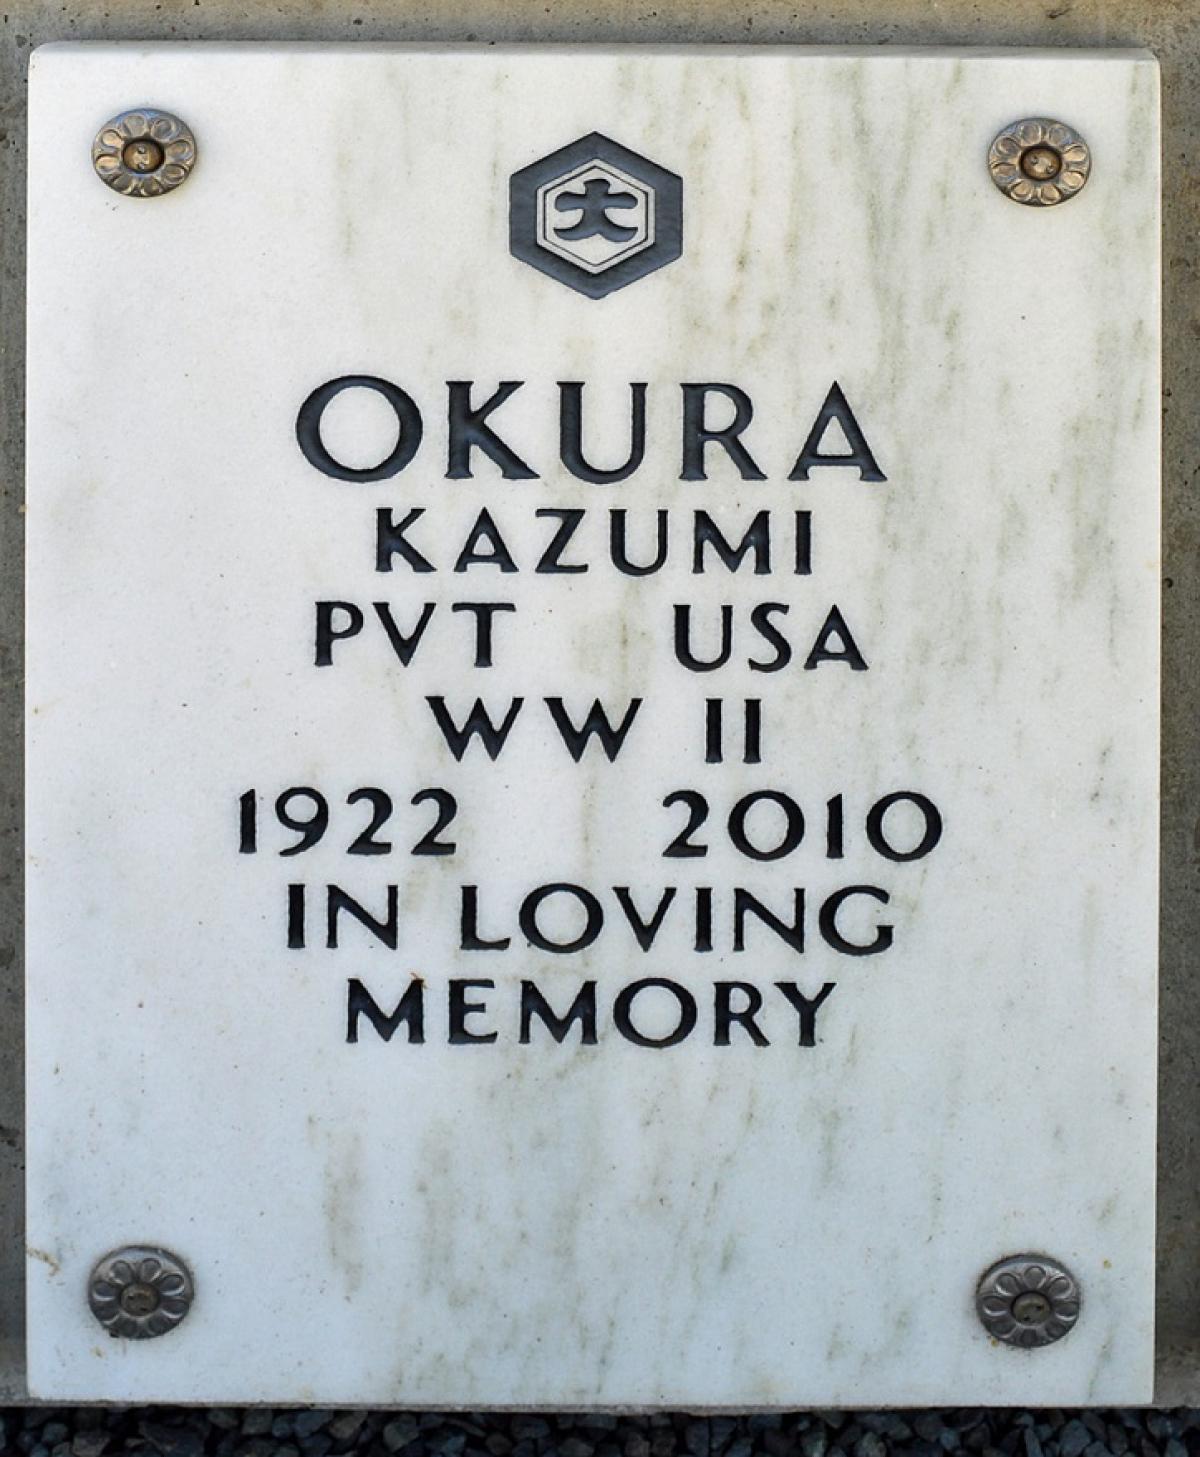 OK, Grove, Headstone Symbols and Meanings, Izumo Taishakyo Mission of Hawaii